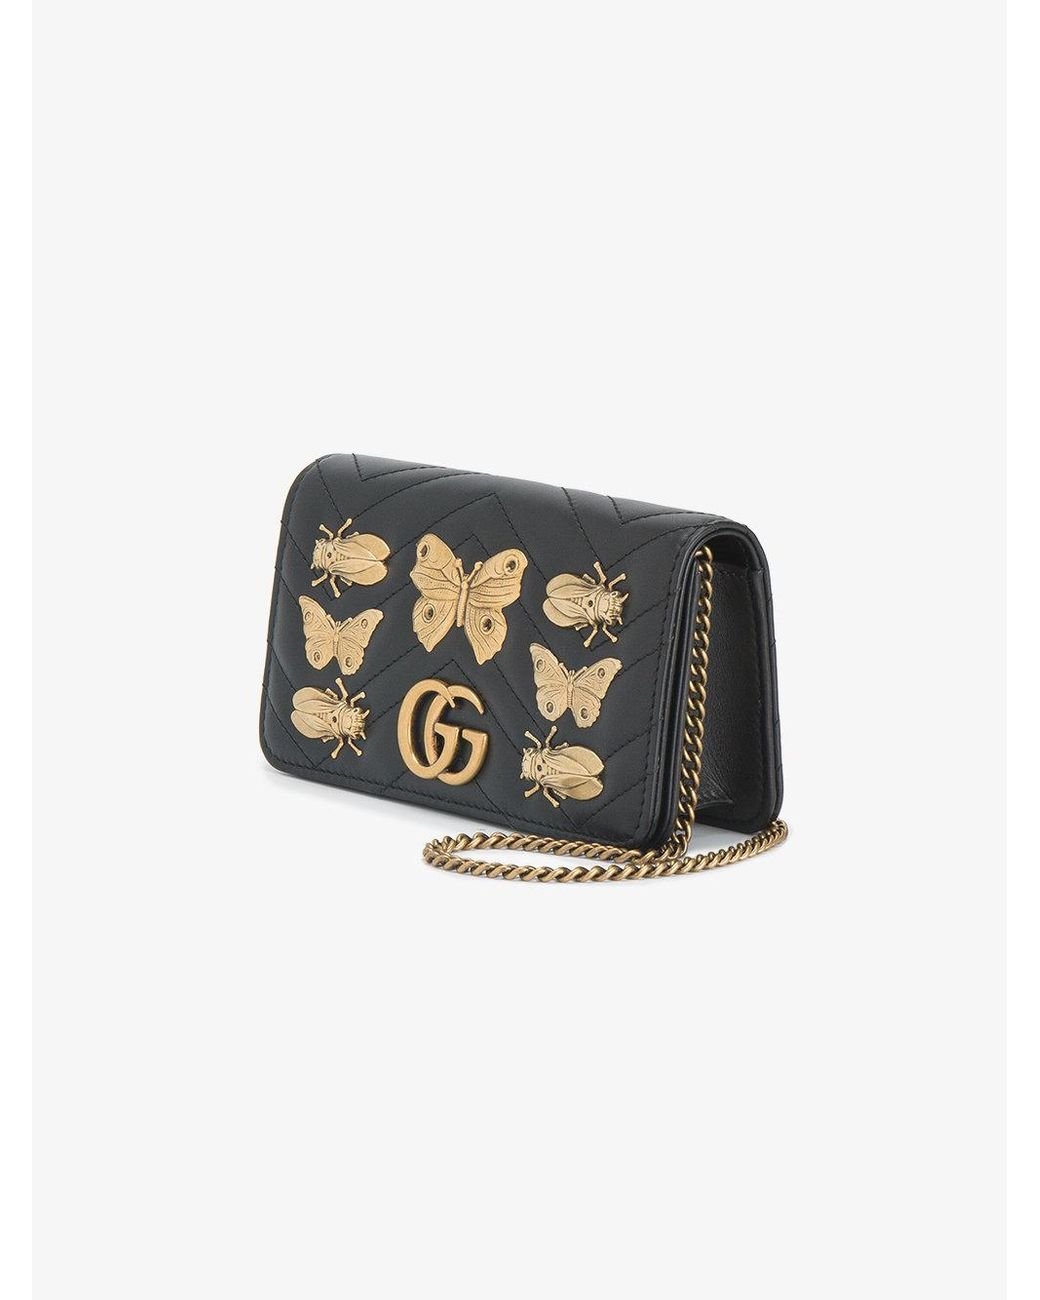 Gucci Gg Marmont Animal Studs Mini Bag in Black | Lyst